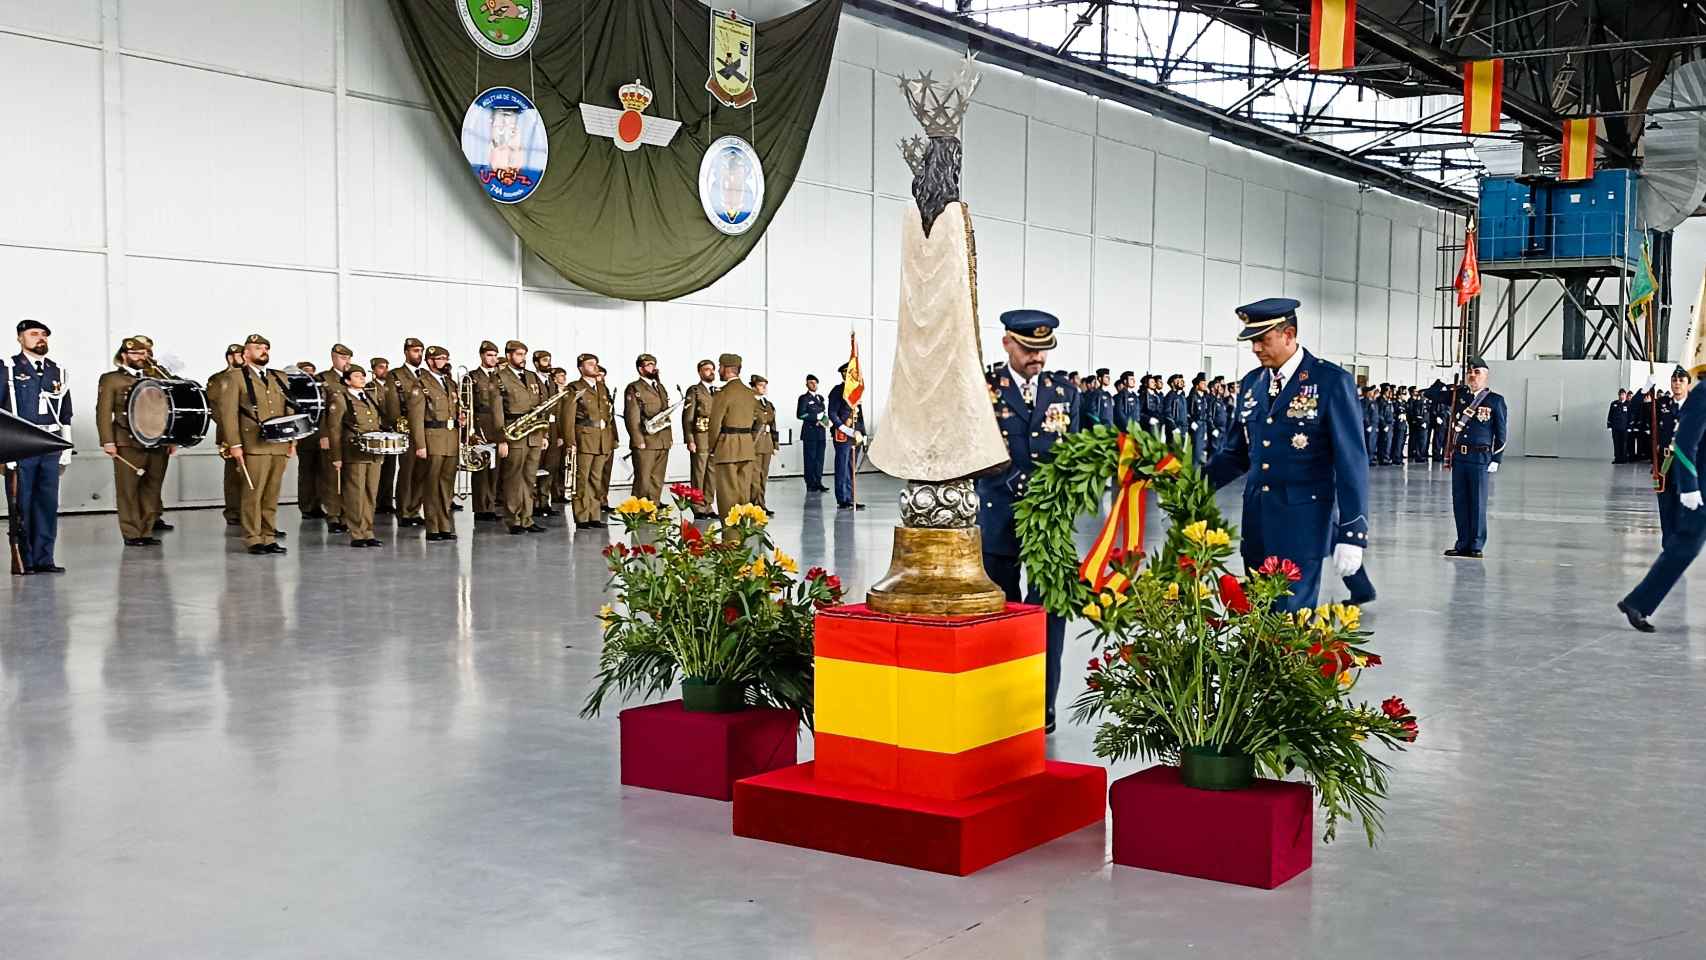 La Base Aérea de Matacán honra a su Patrona